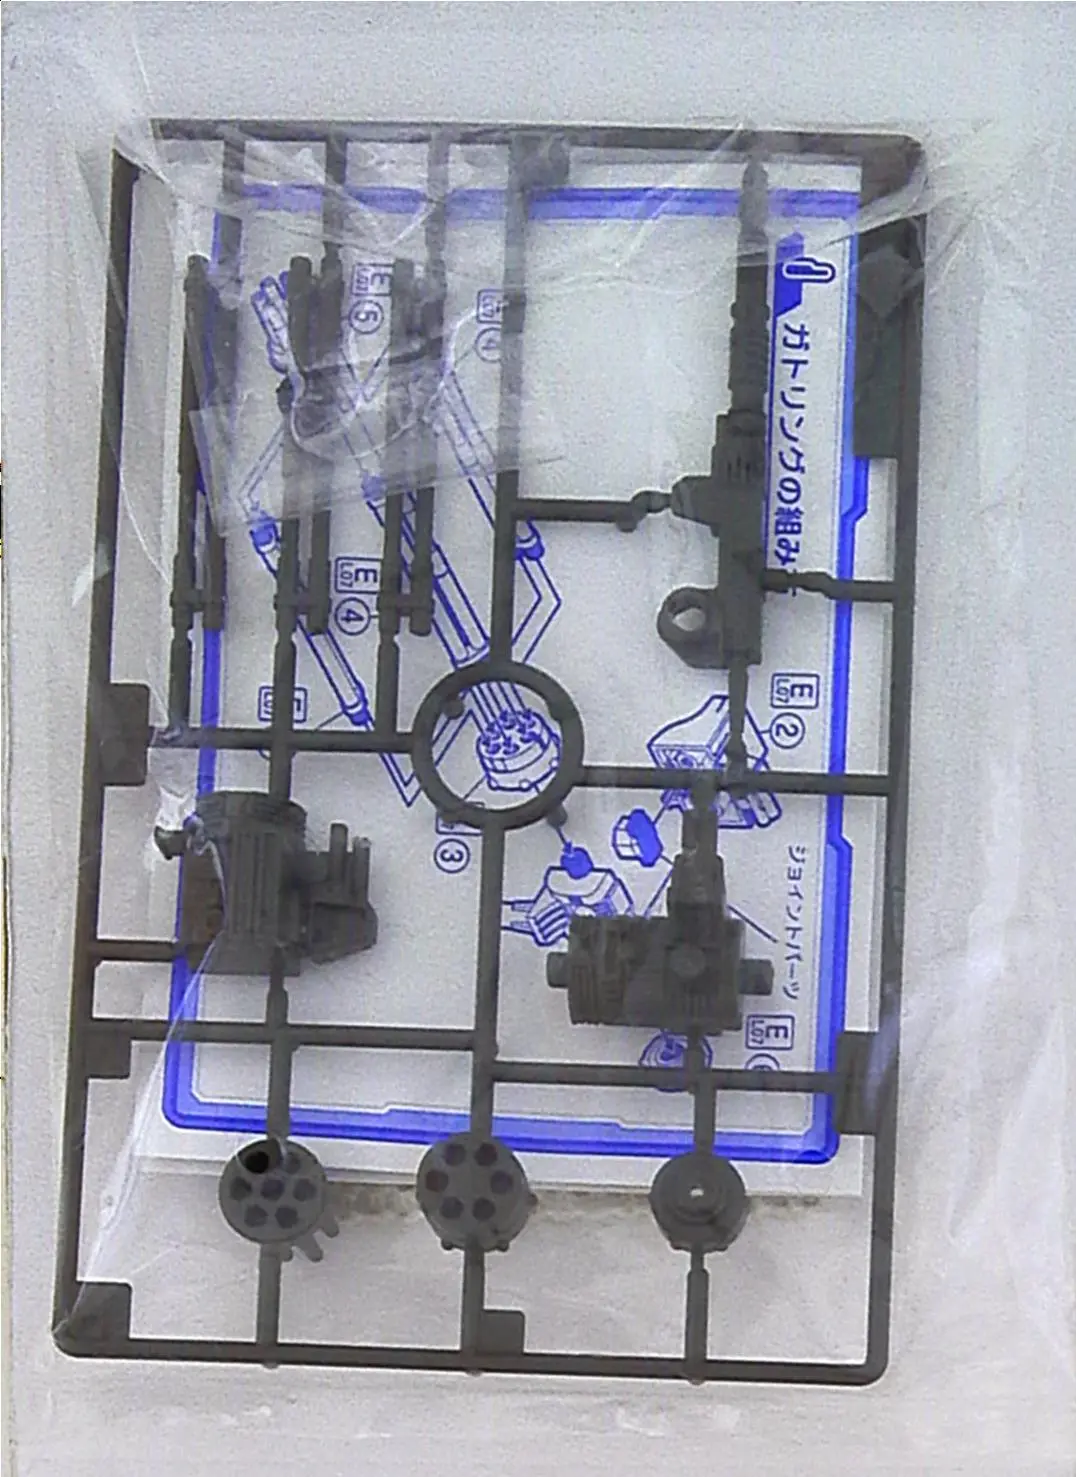 Plastic Model Kit - ZOIDS